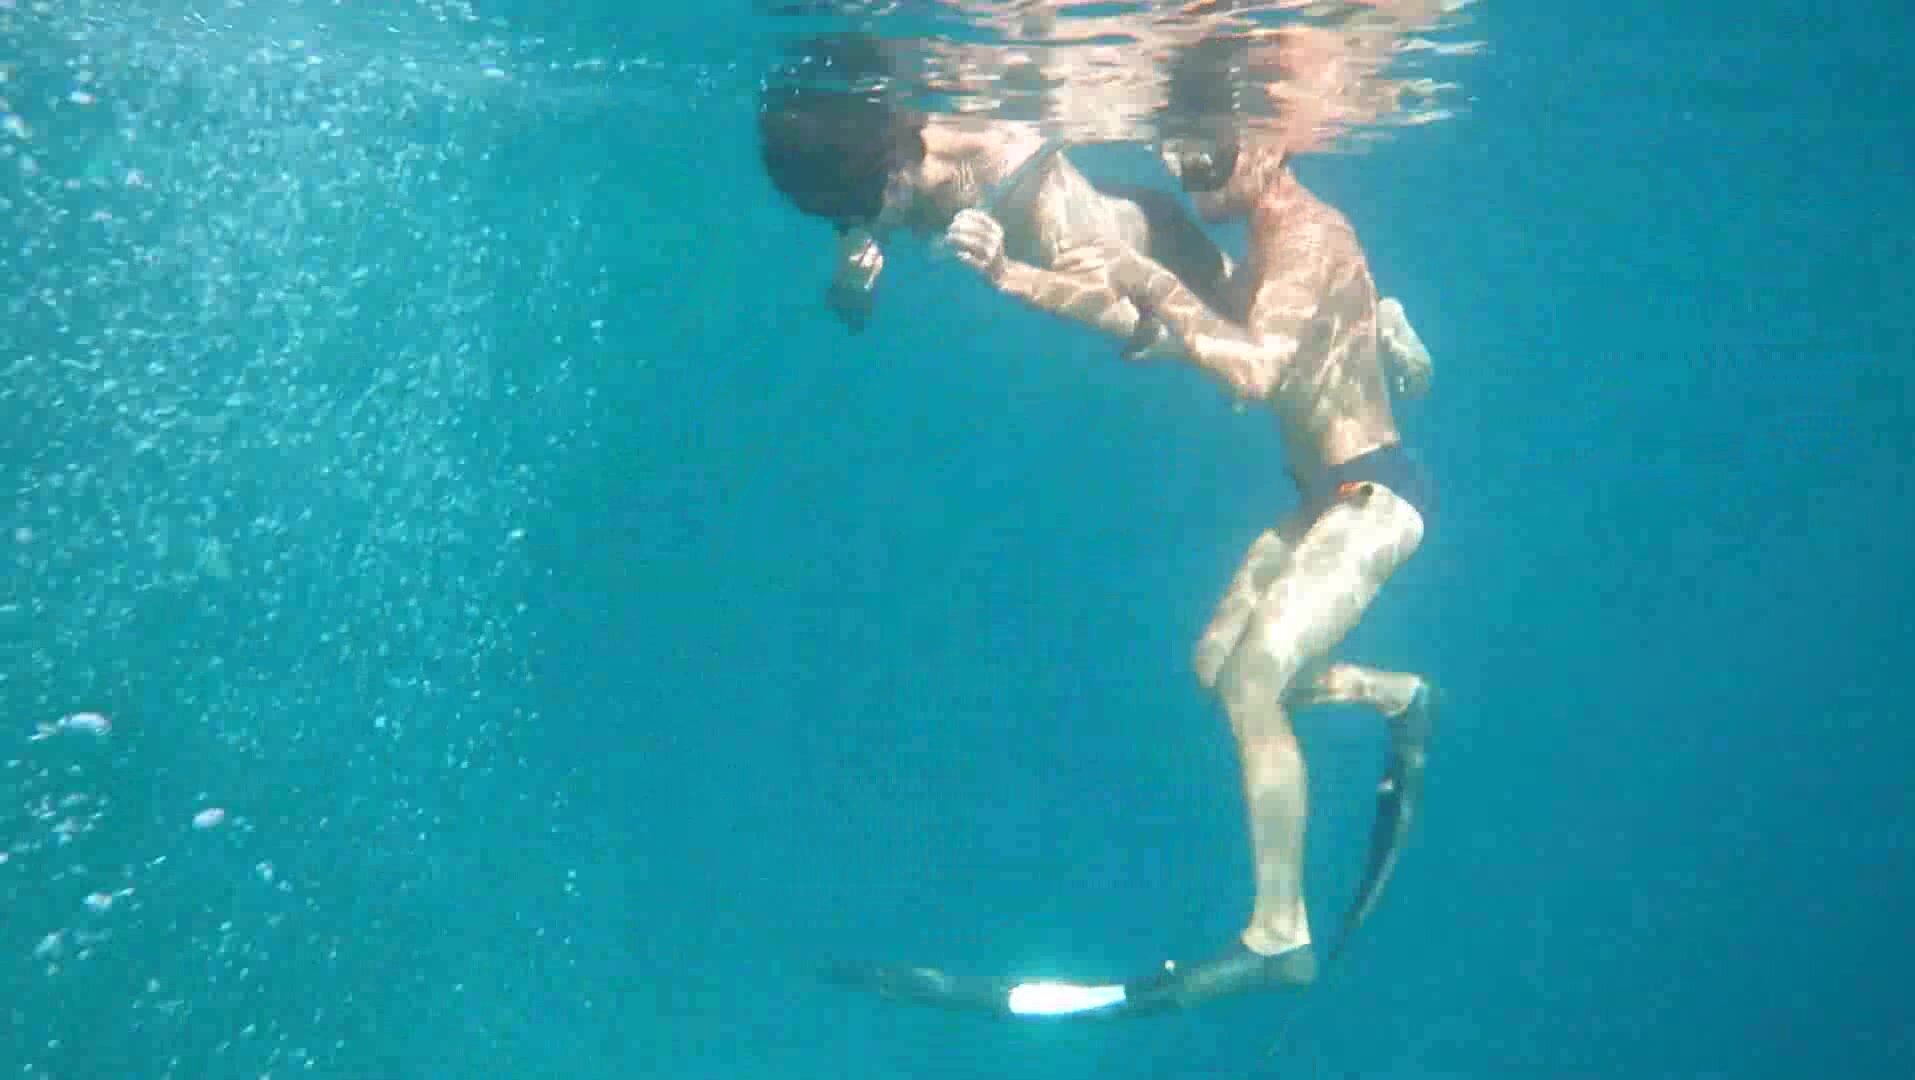 Freedivers underwater in tight speedos